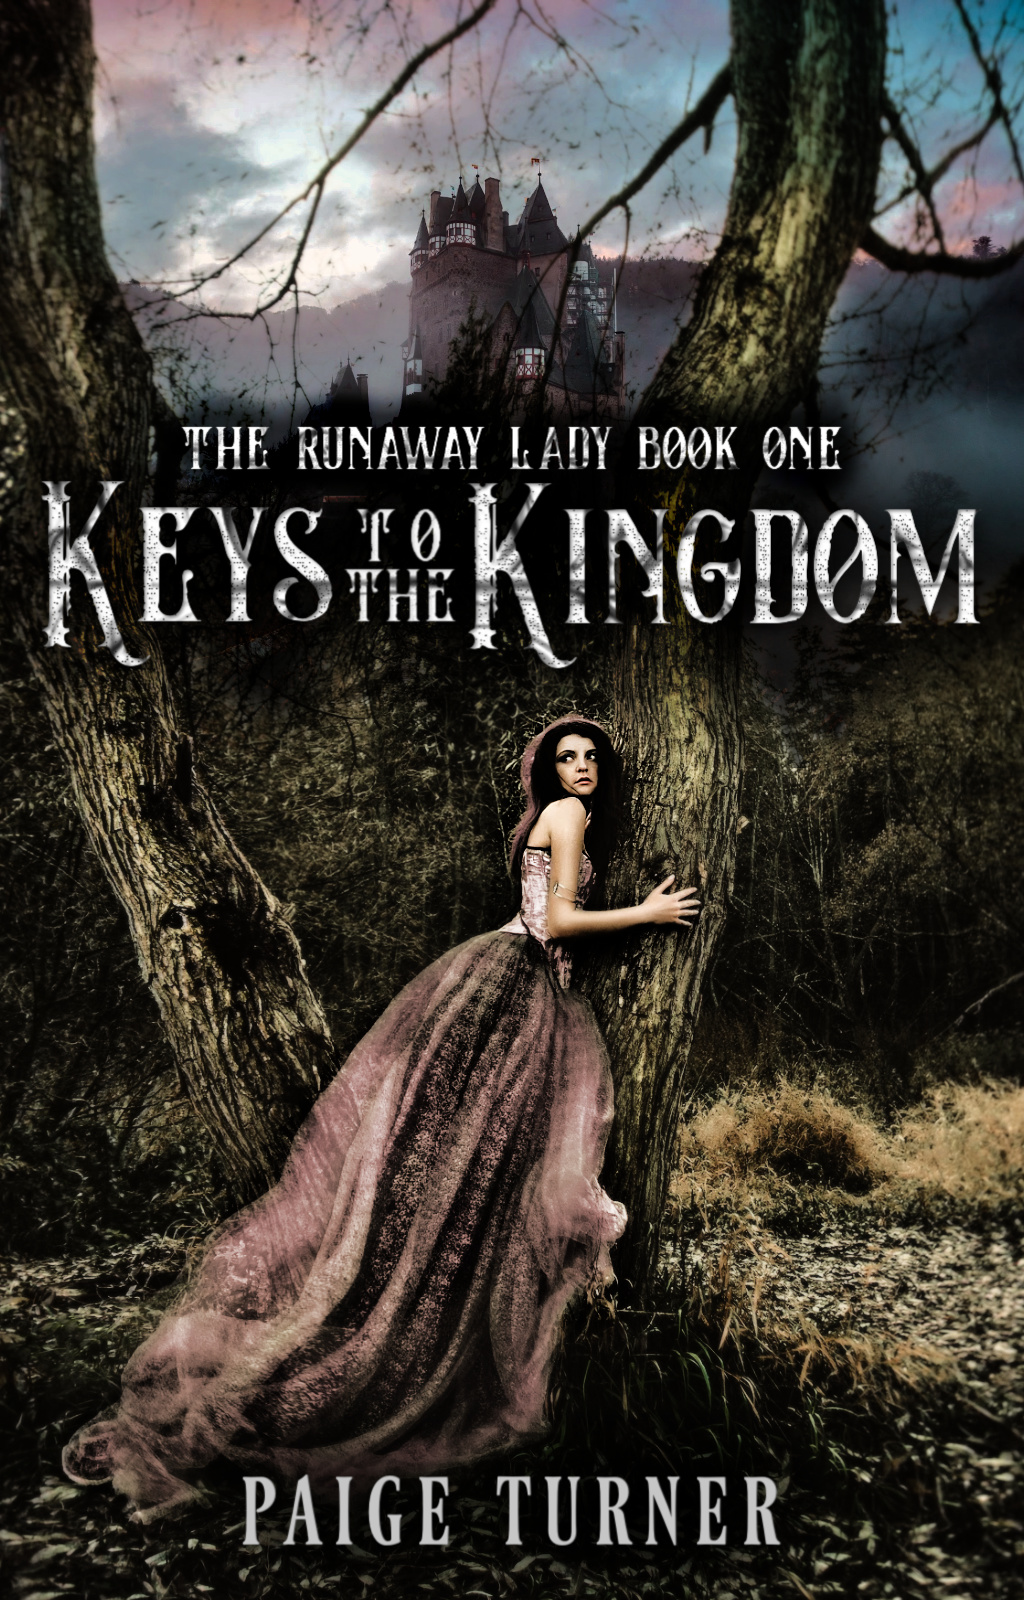 197-617-keys-to-the-kingdom-2.jpg